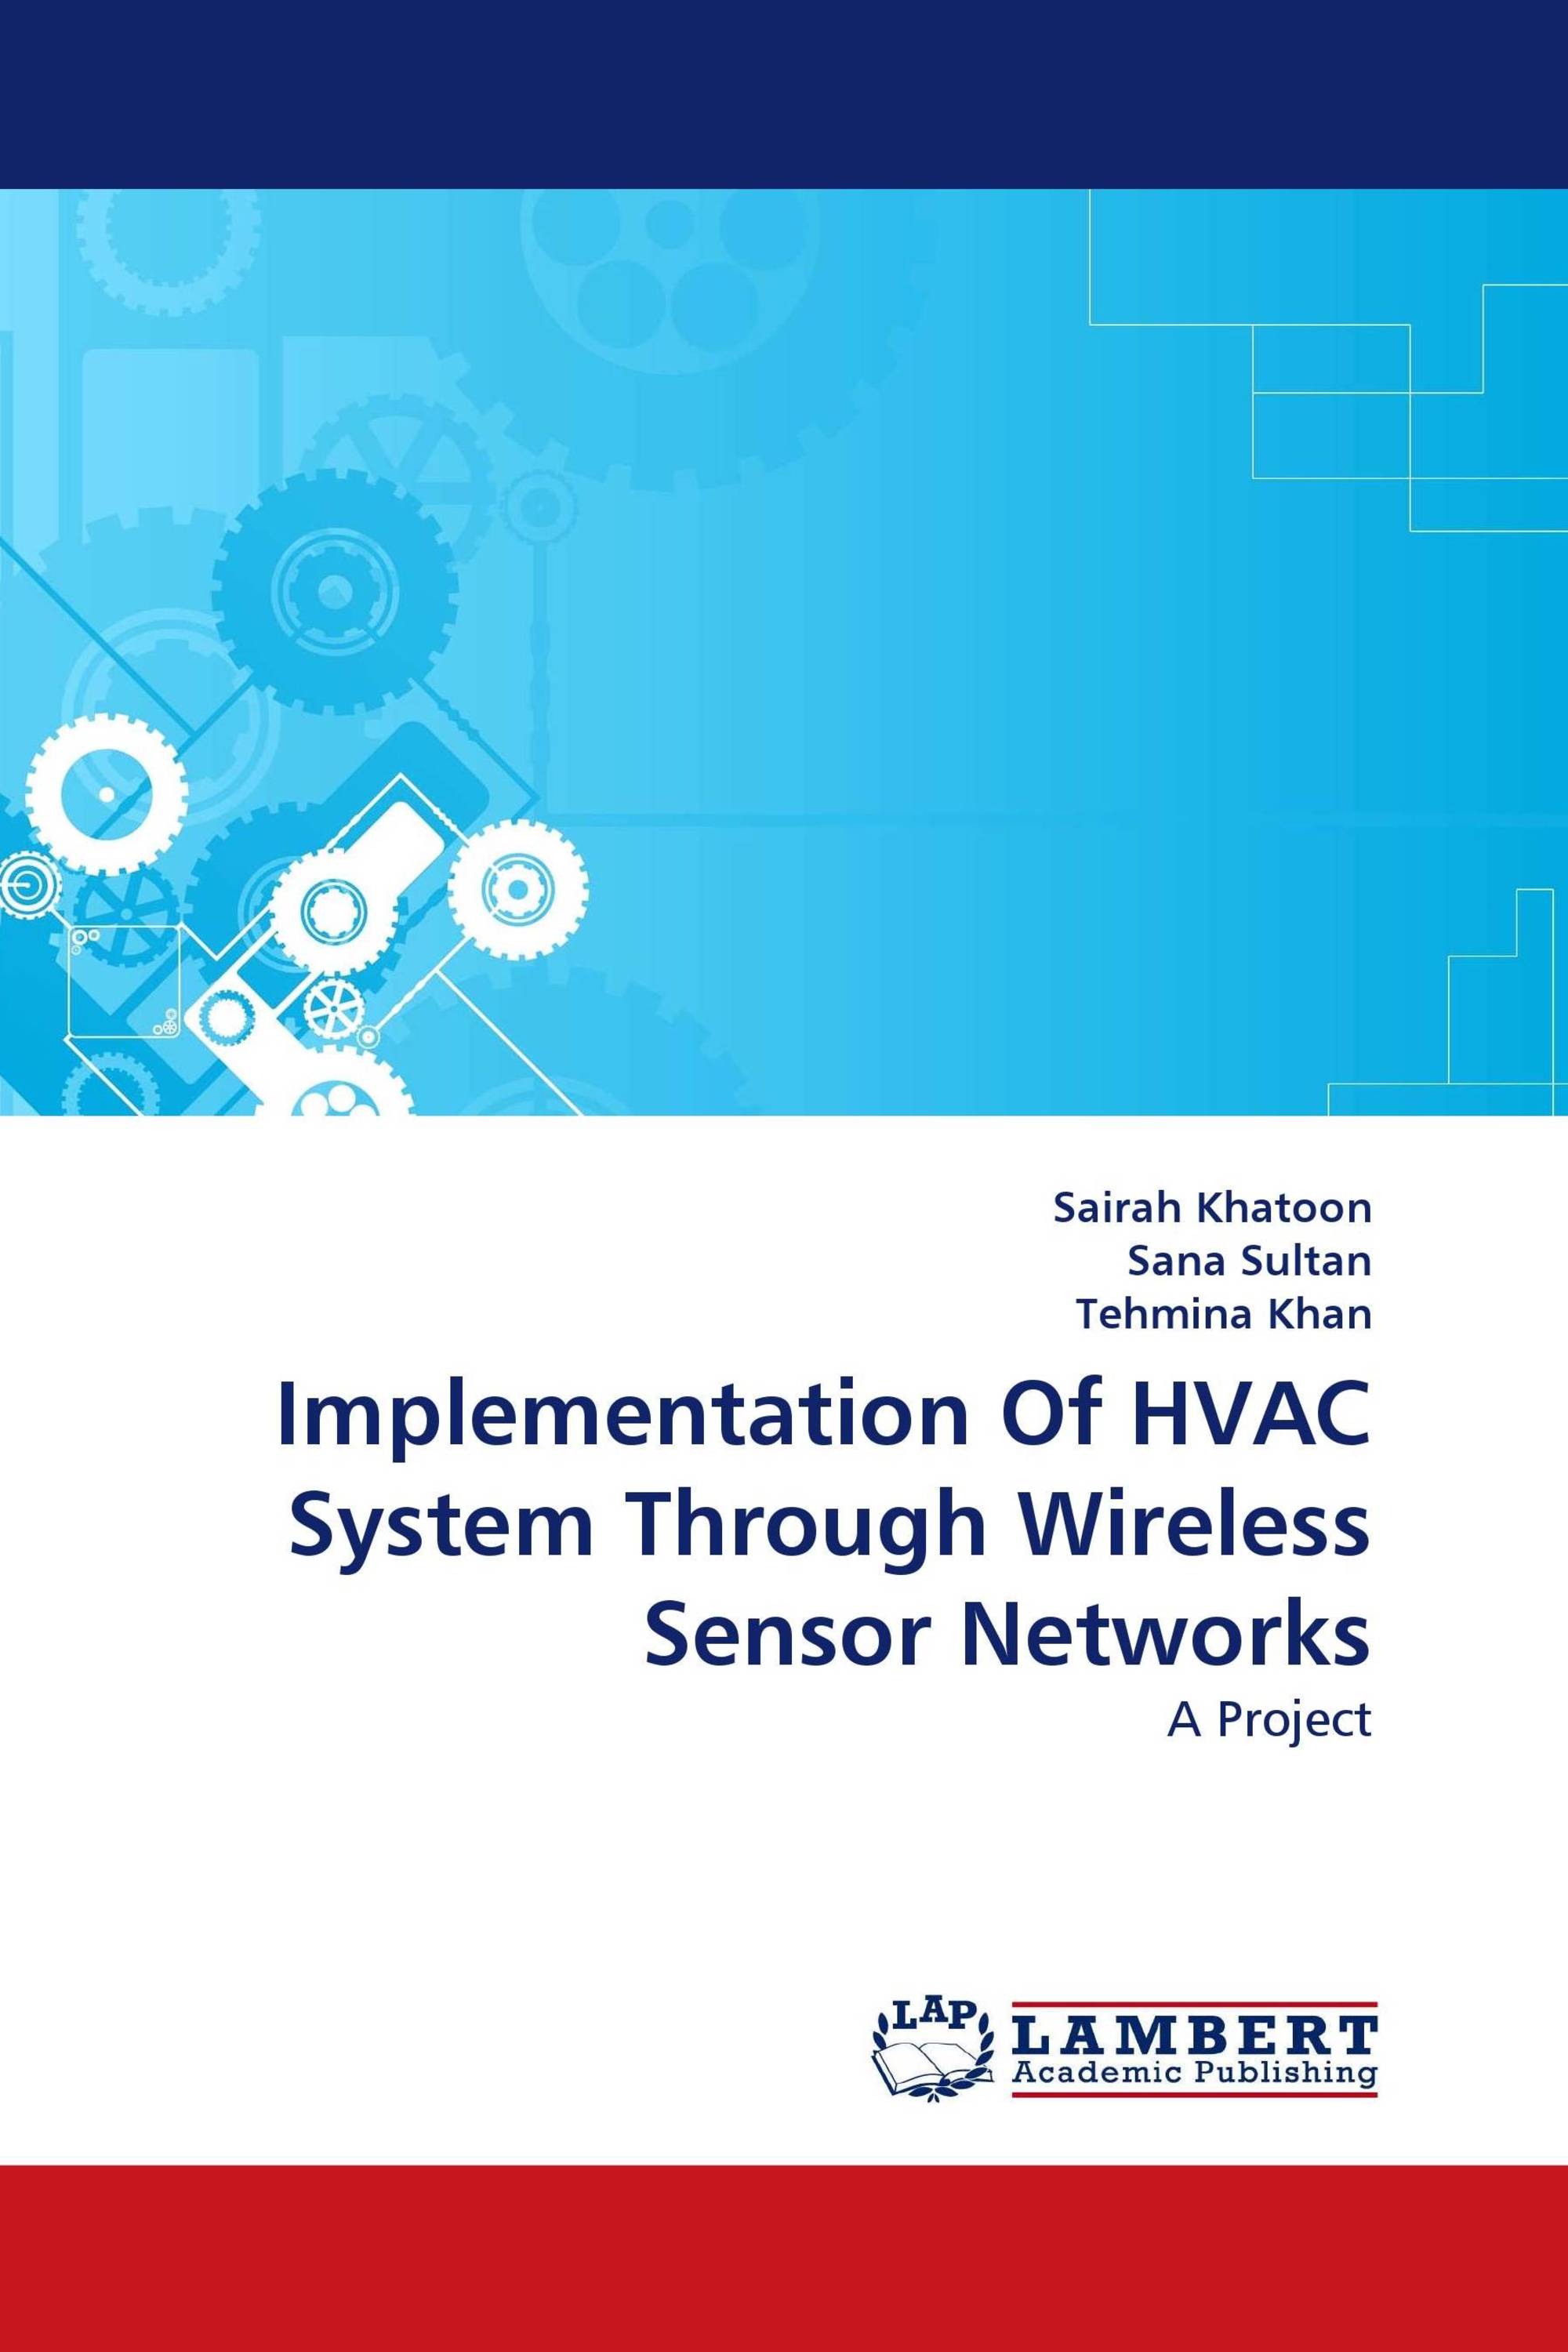 Implementation Of HVAC System Through Wireless Sensor Networks